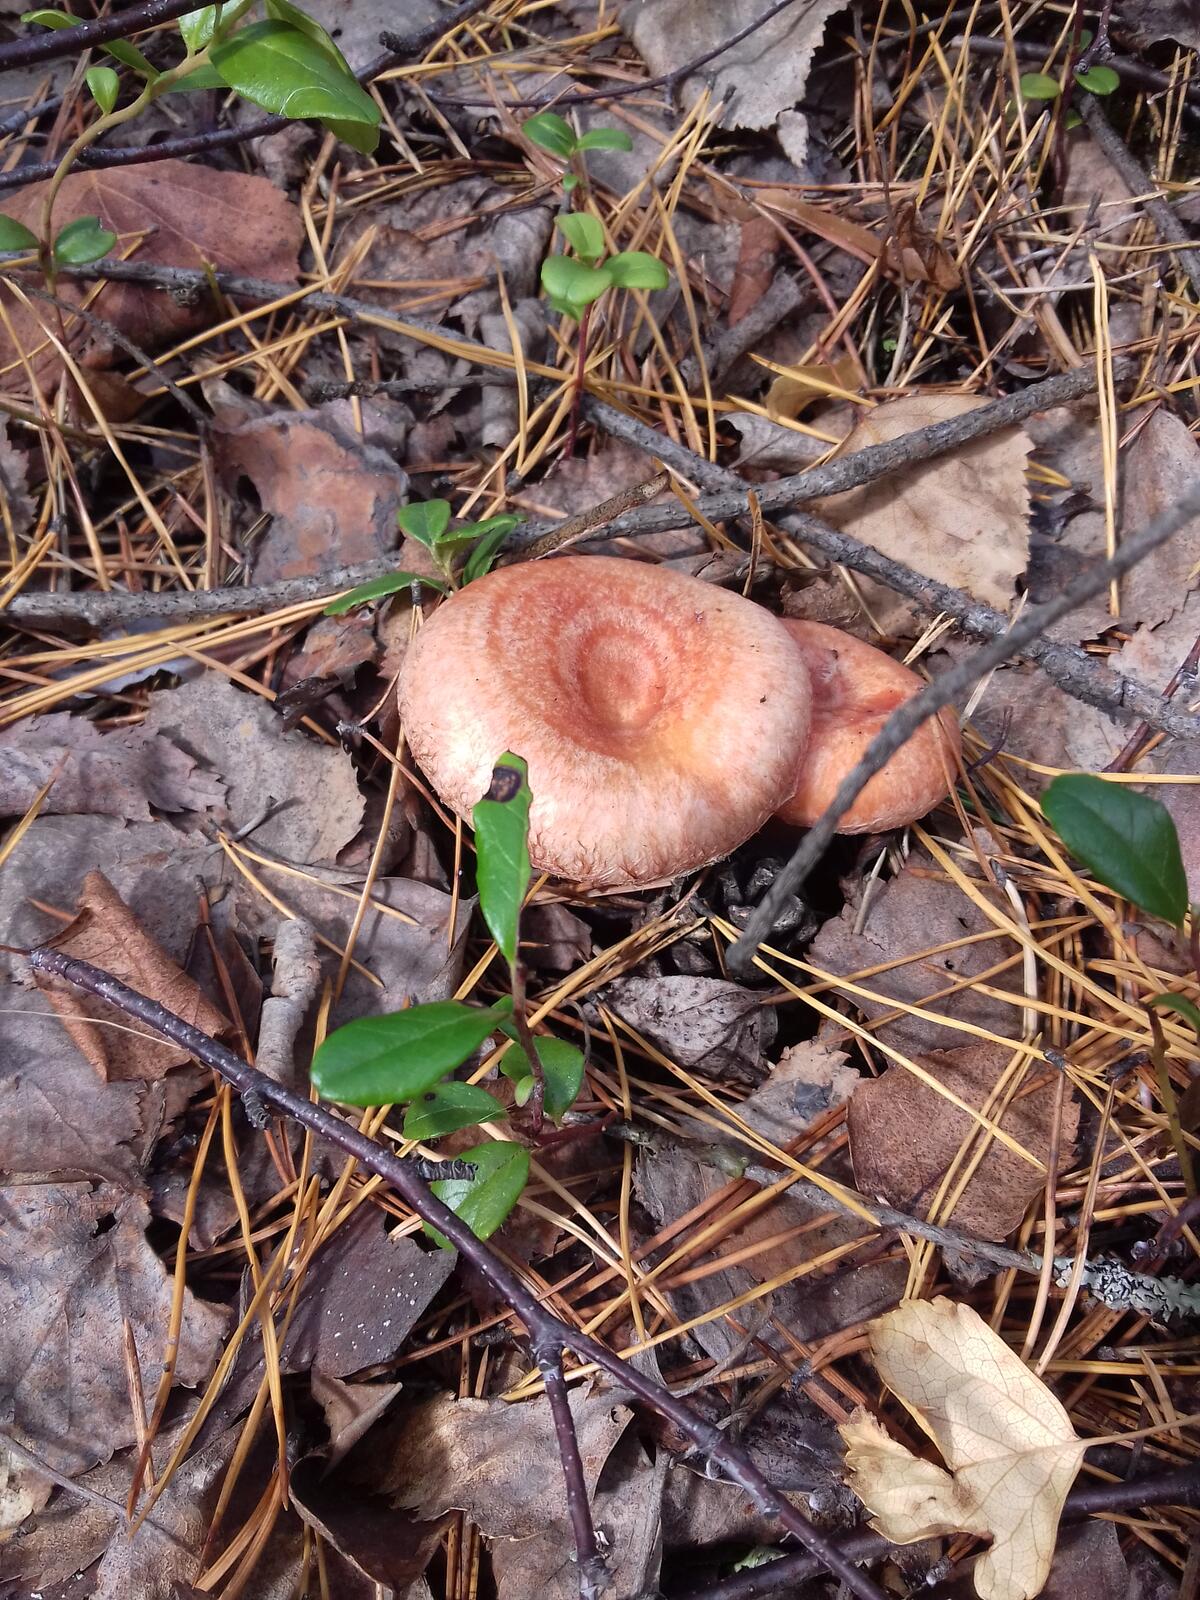 Growing wild boletus mushrooms